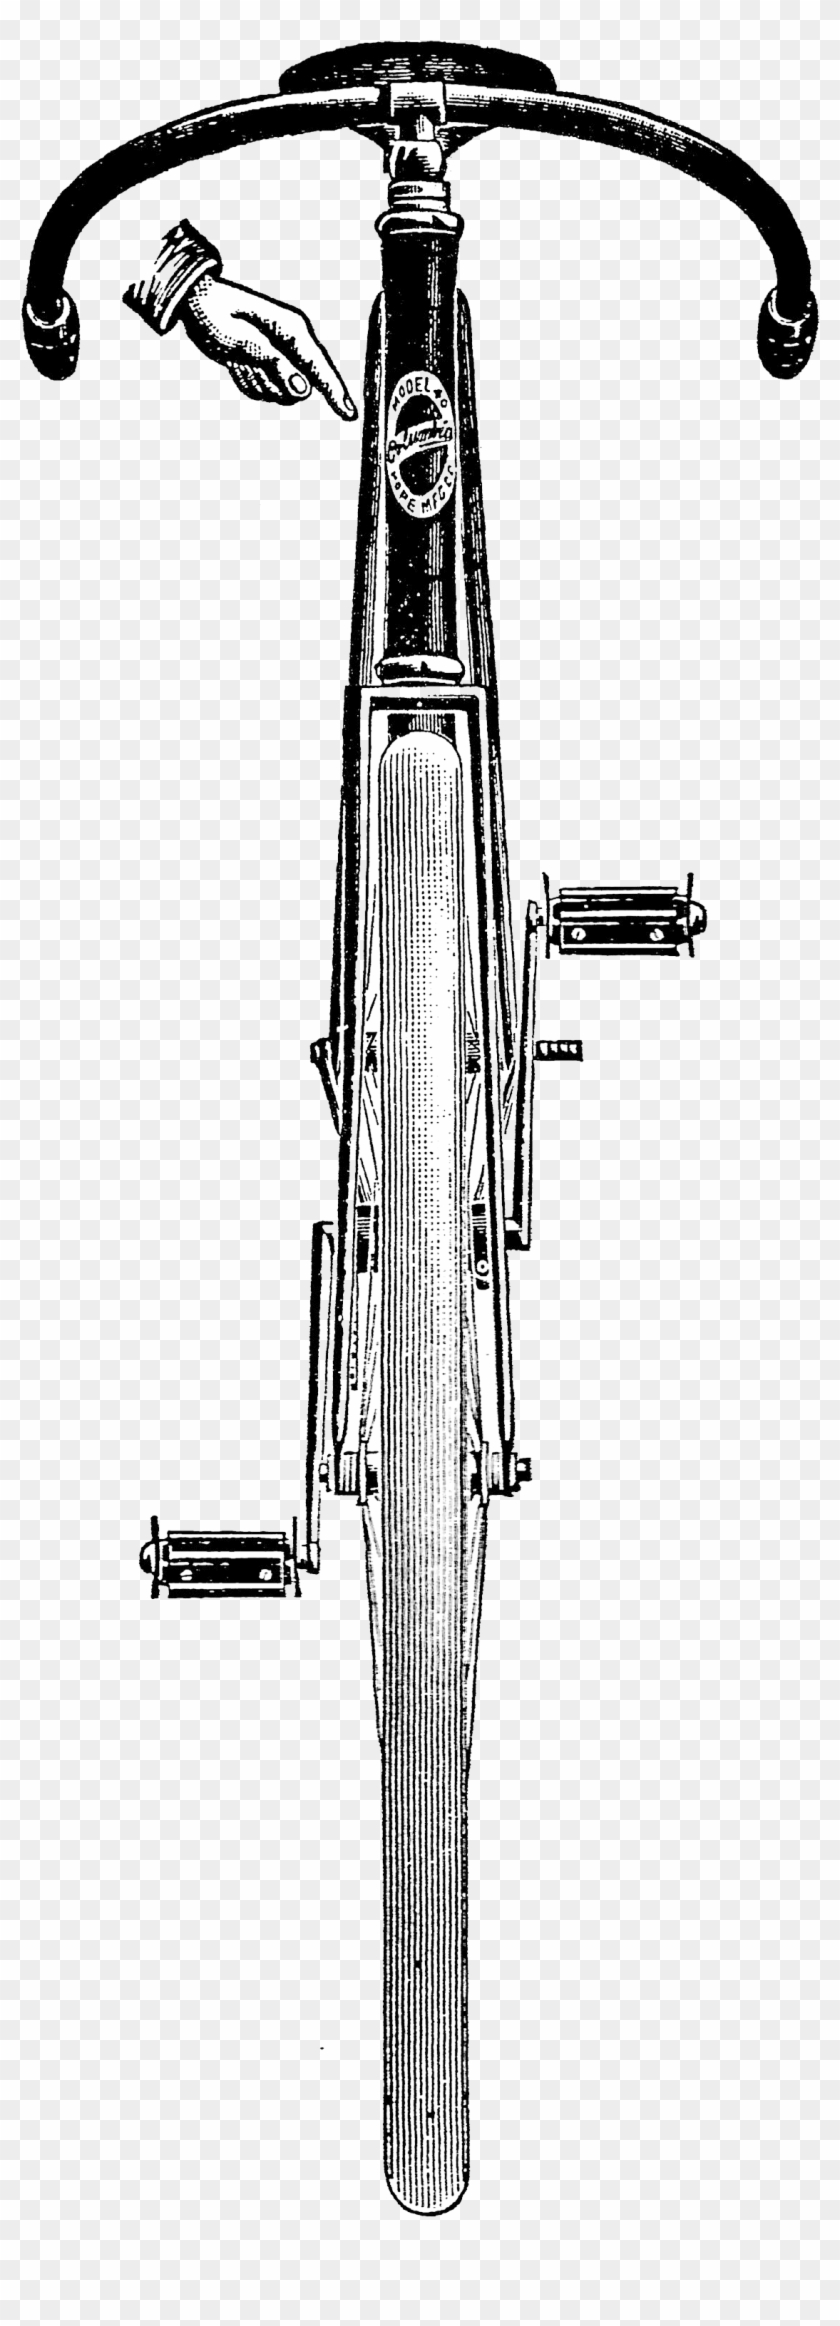 Free Vintage Clip Art - Gun Barrel #1669667